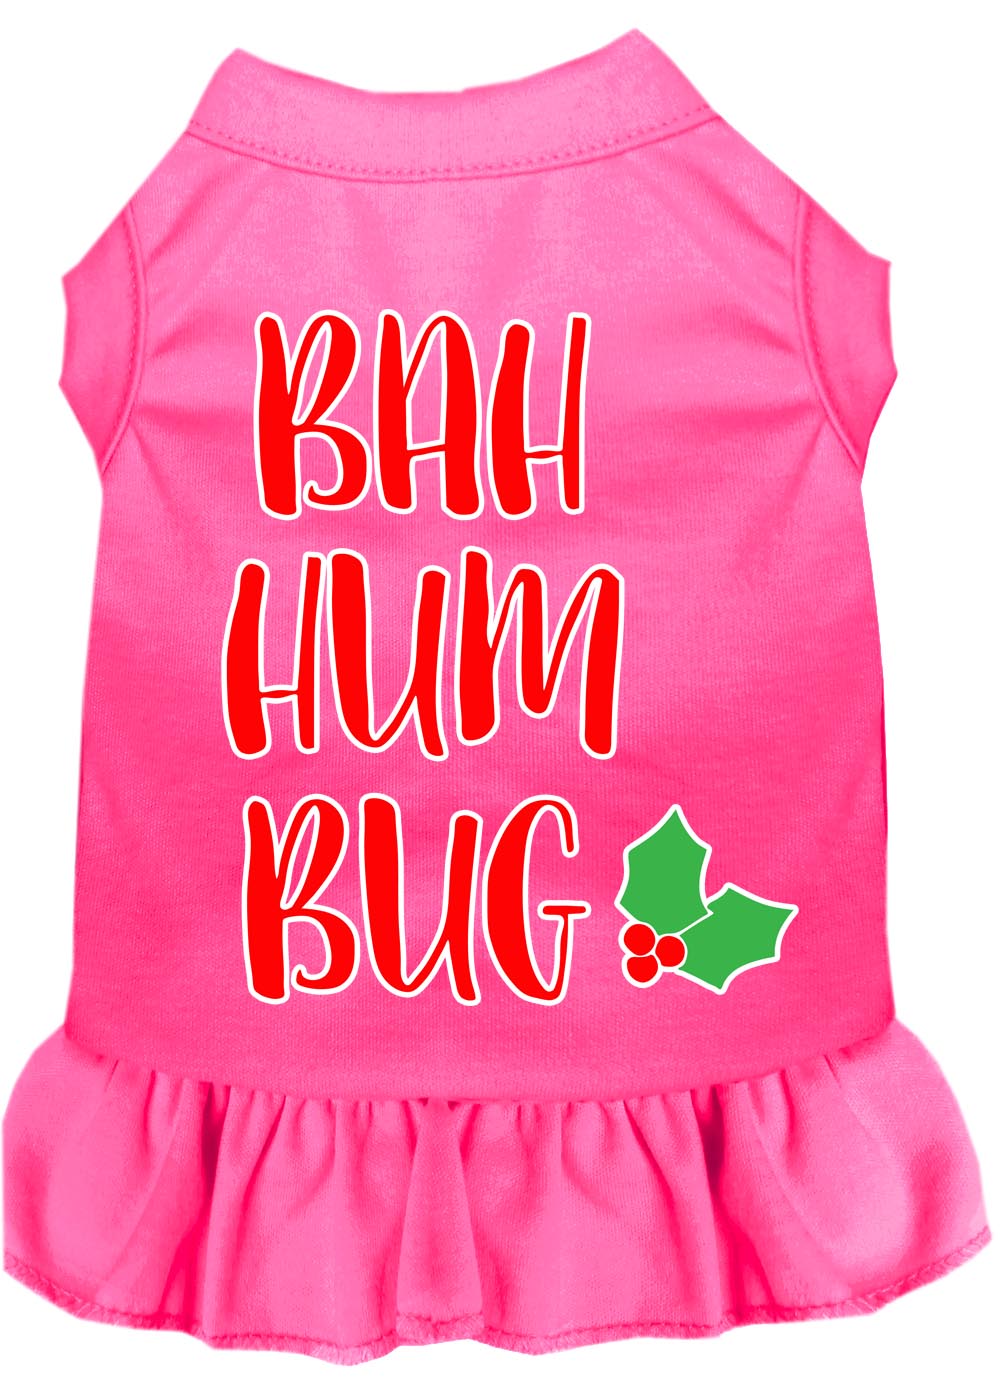 Bah Humbug Screen Print Dog Dress Bright Pink Lg